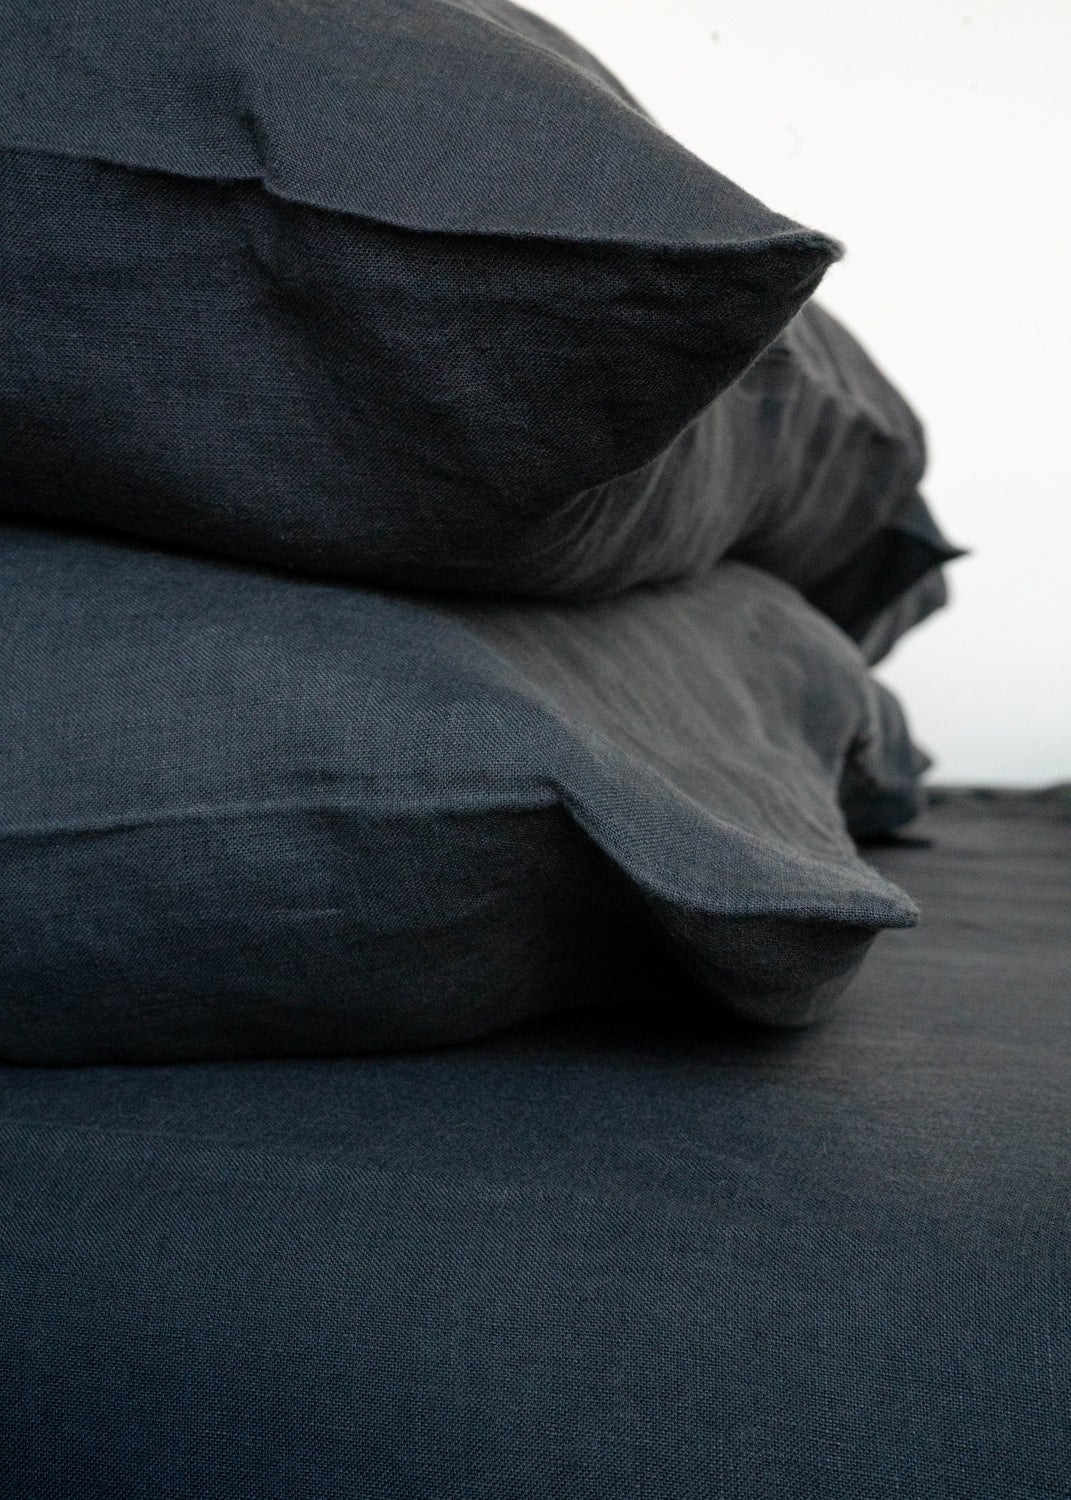 Soft Comfort - The Plush Benefits of a Linen Pillowcase Set